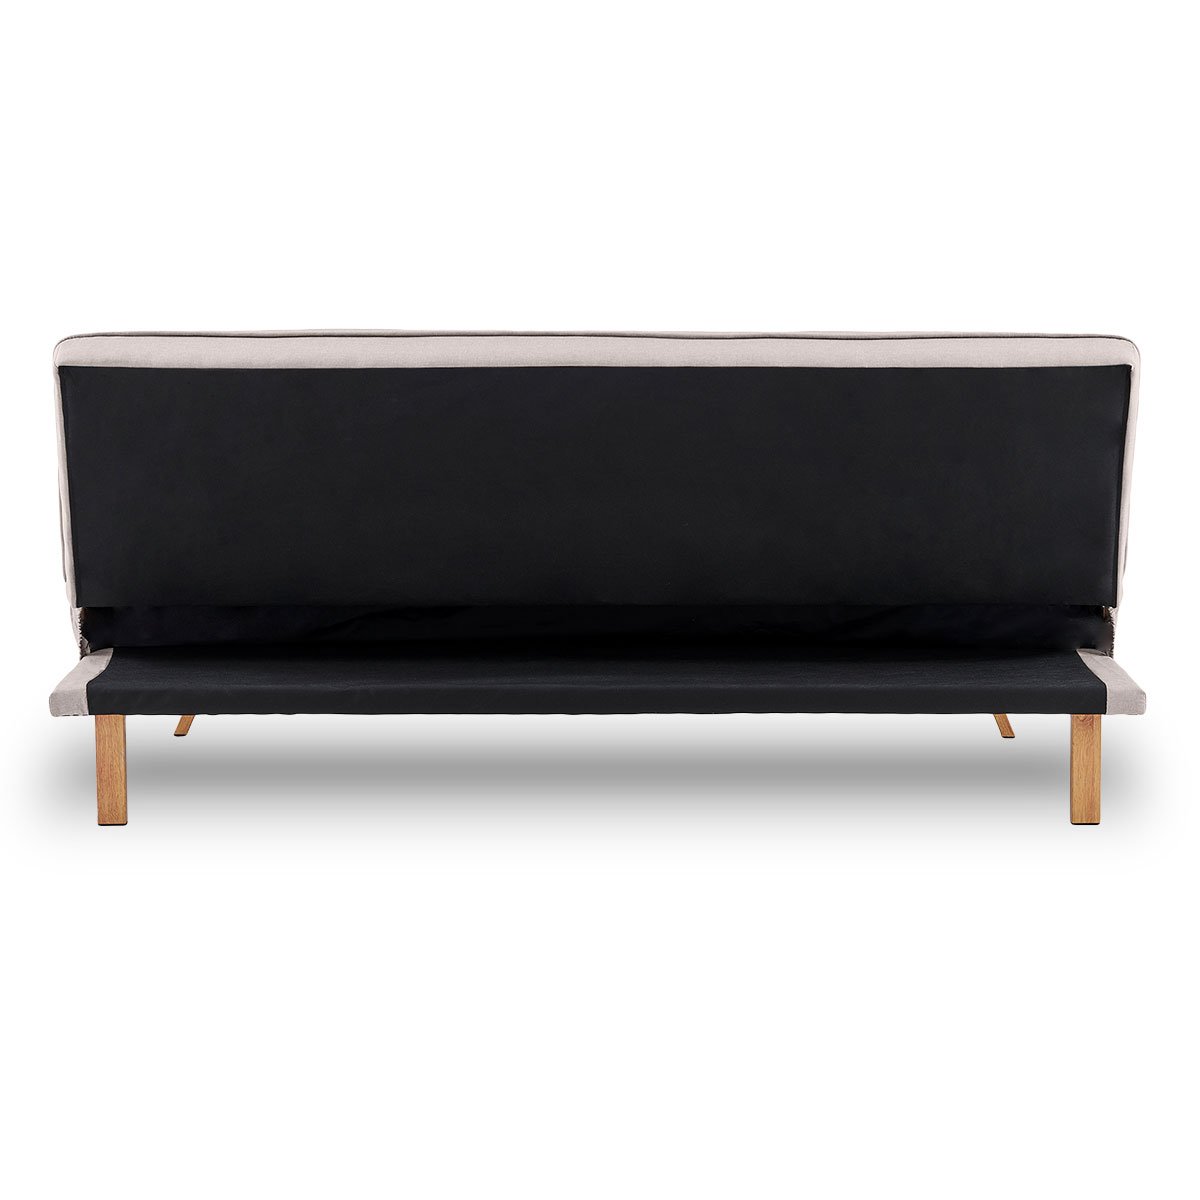 indoor furniture 3 Seater Modular Linen Fabric Sofa Bed Couch Futon - Beige